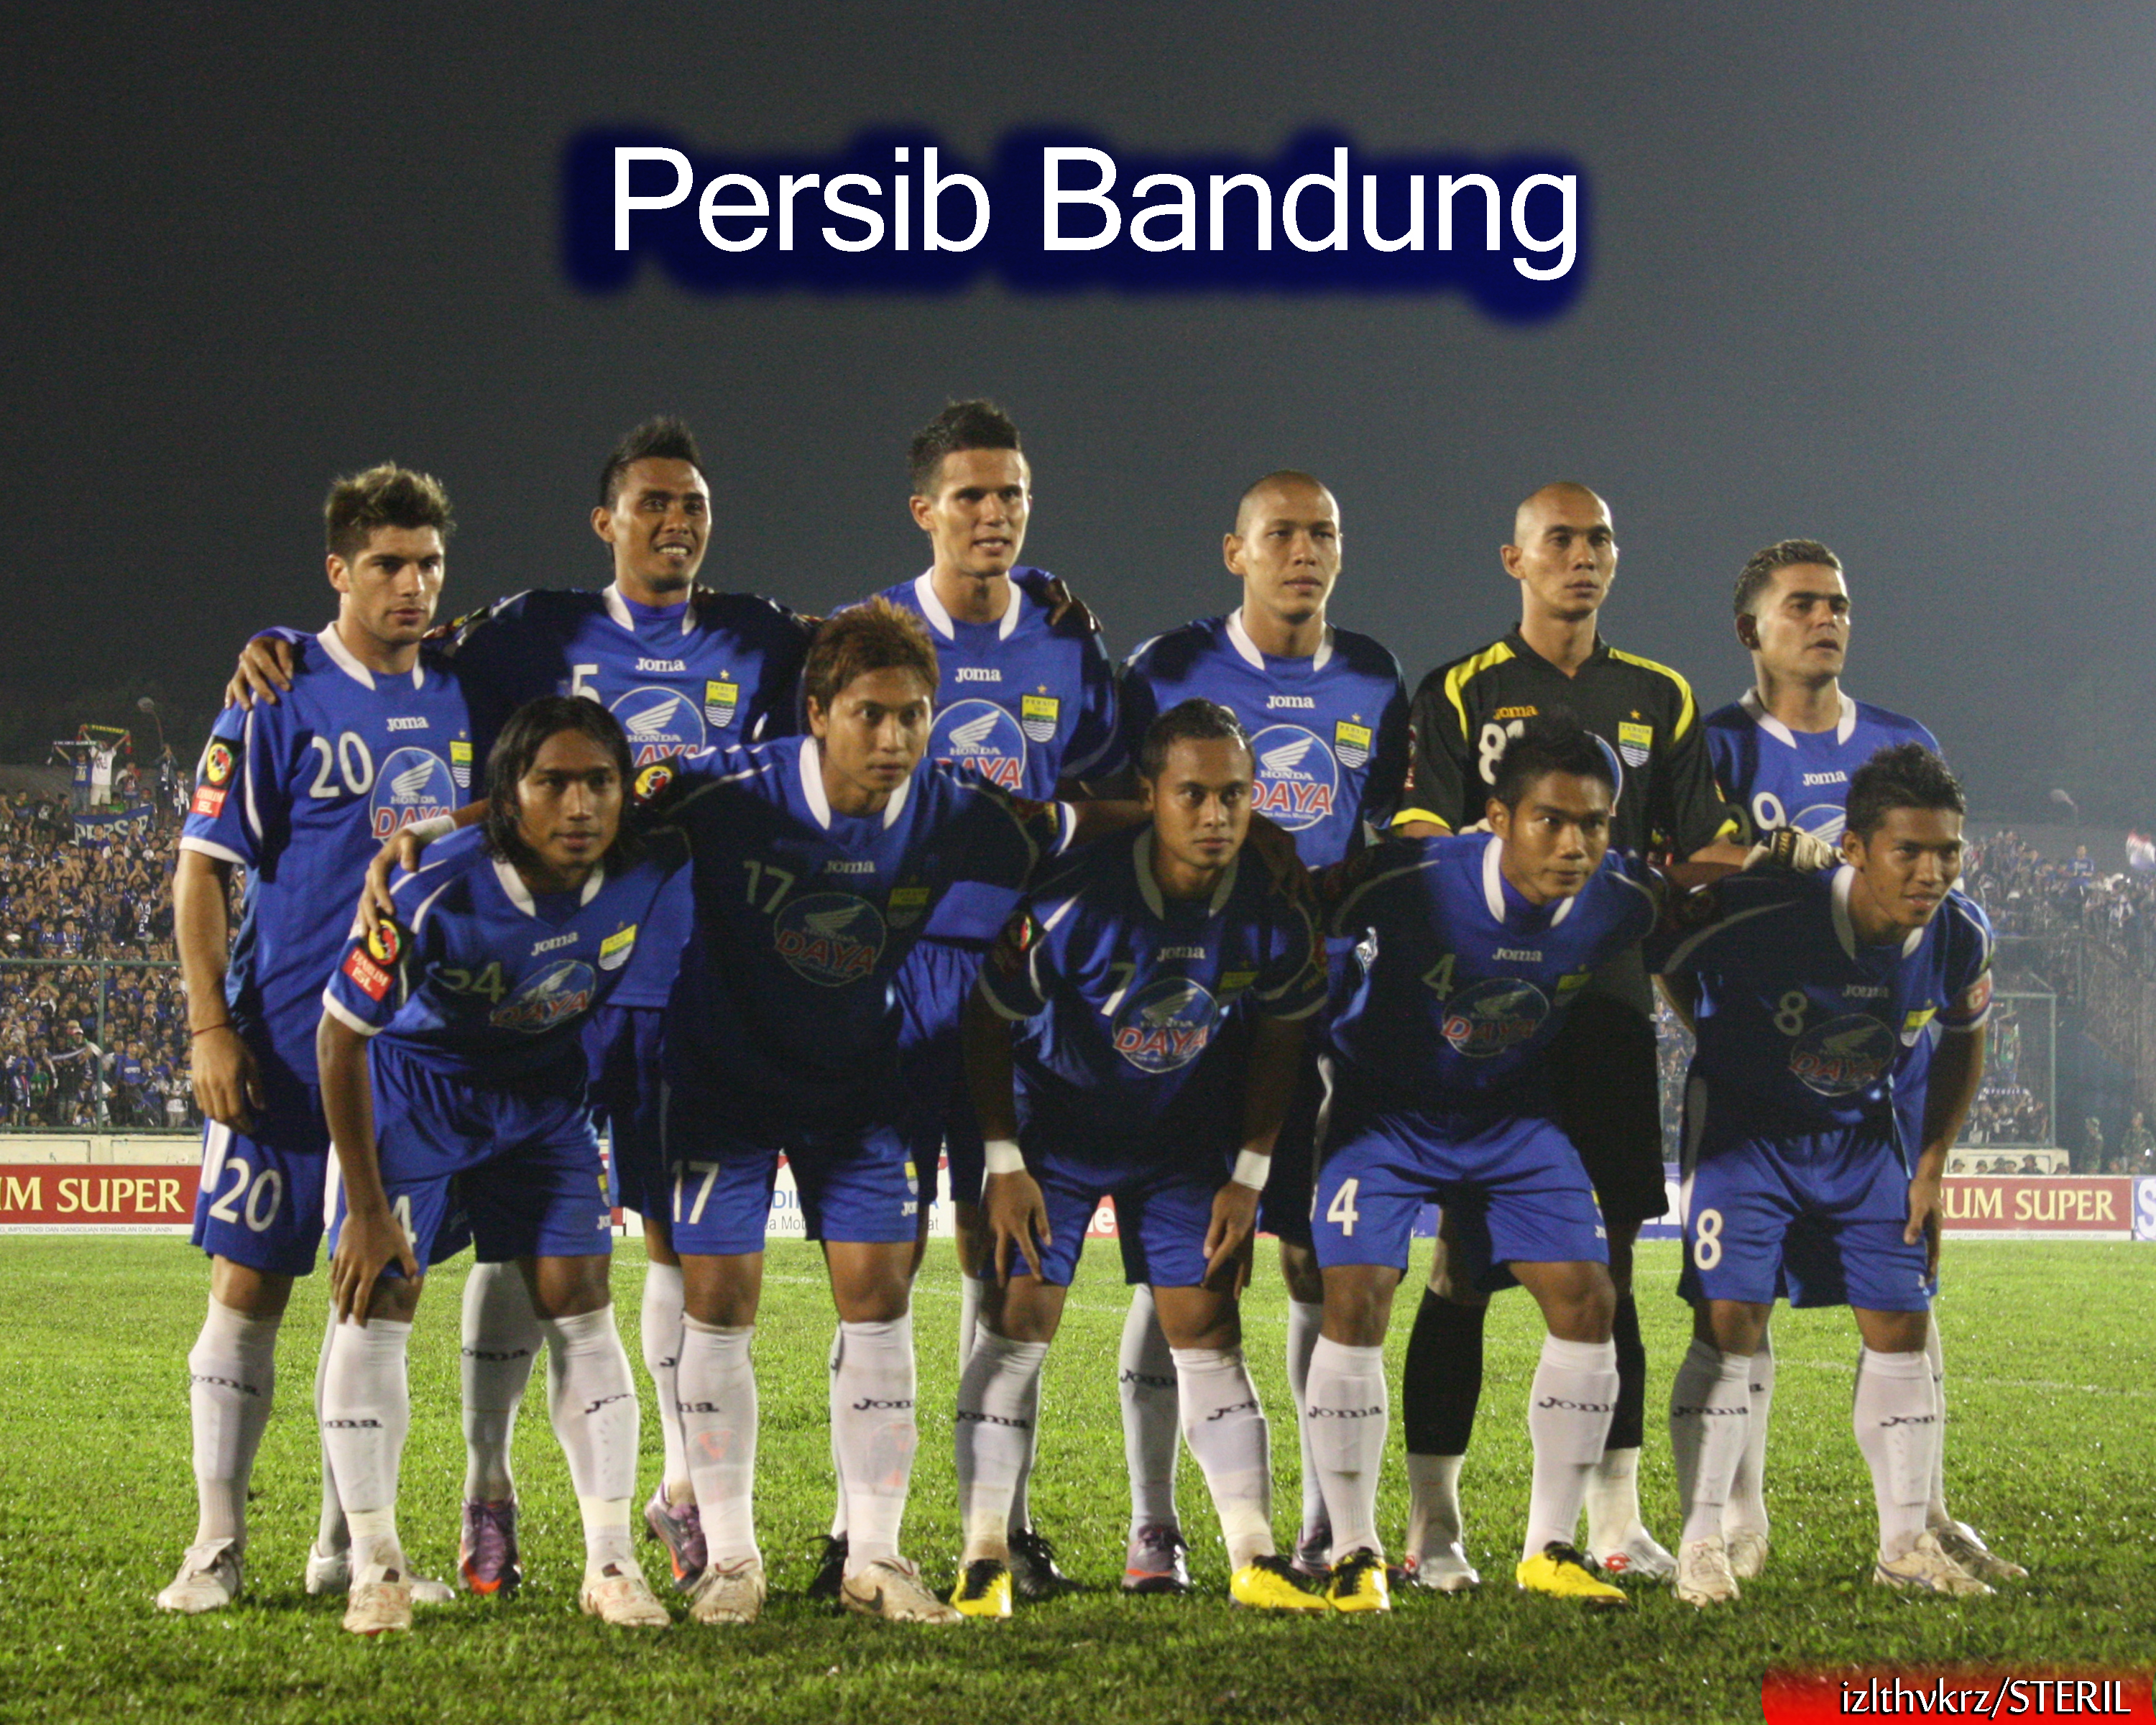 2013 Persib Bandung season ends after Persib39;s failure to qualify i